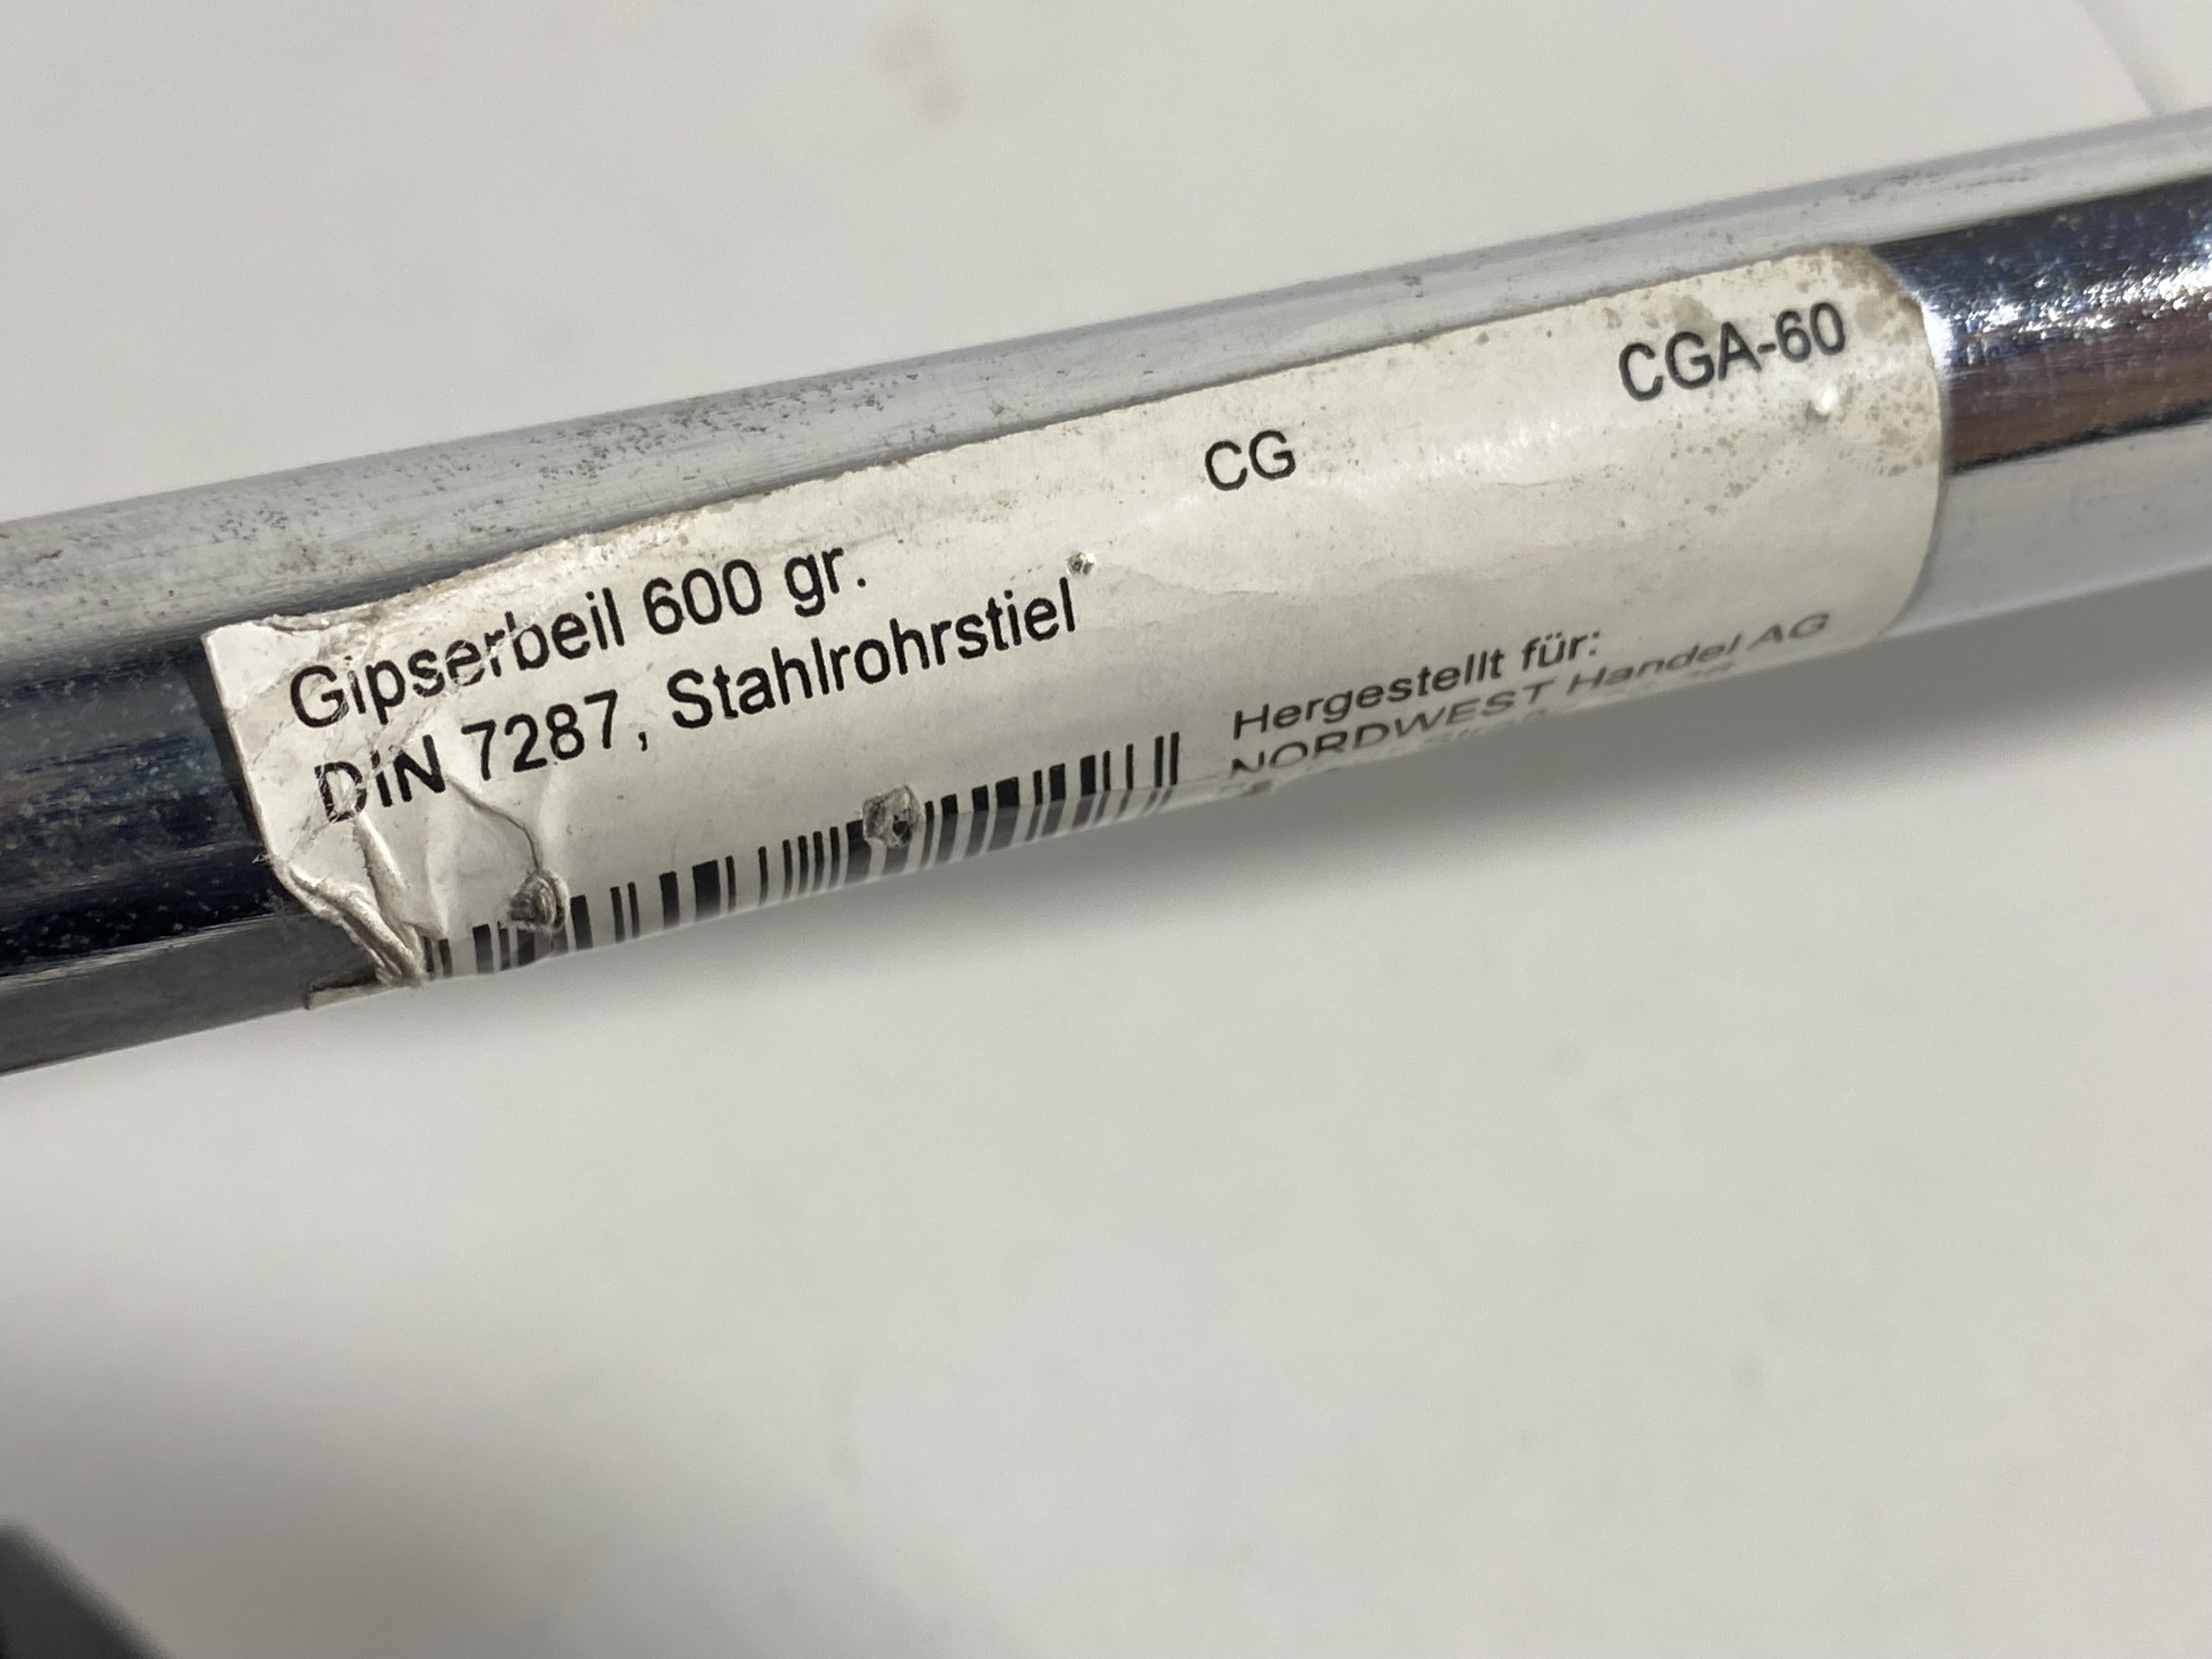 Gipsbijl 600 gram CGA-60 